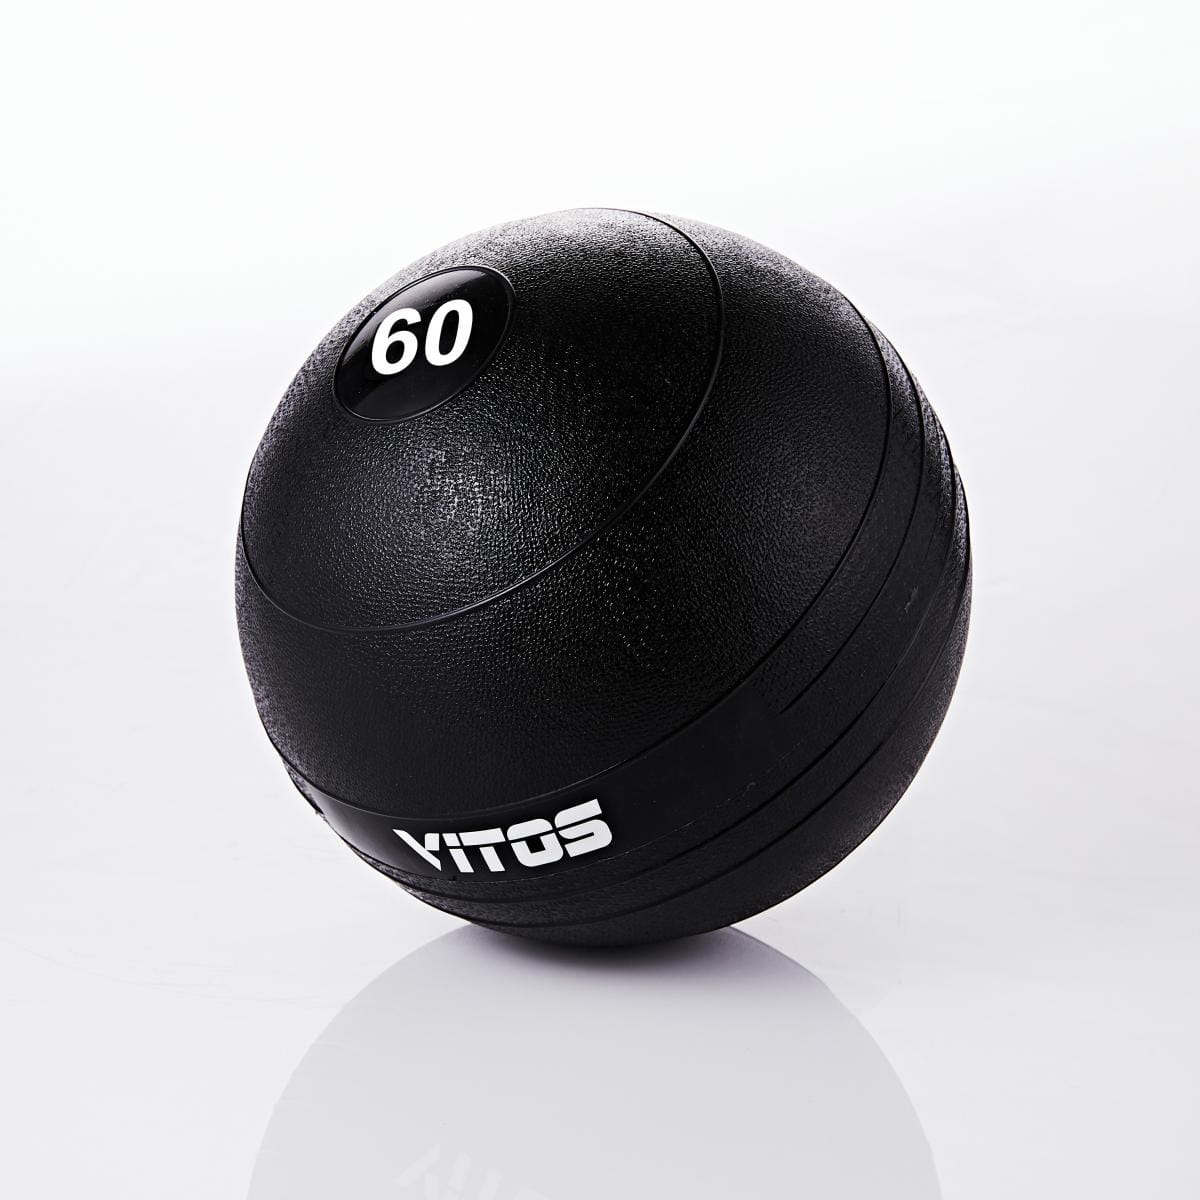 VITOS 重力球 60磅 27公斤 0